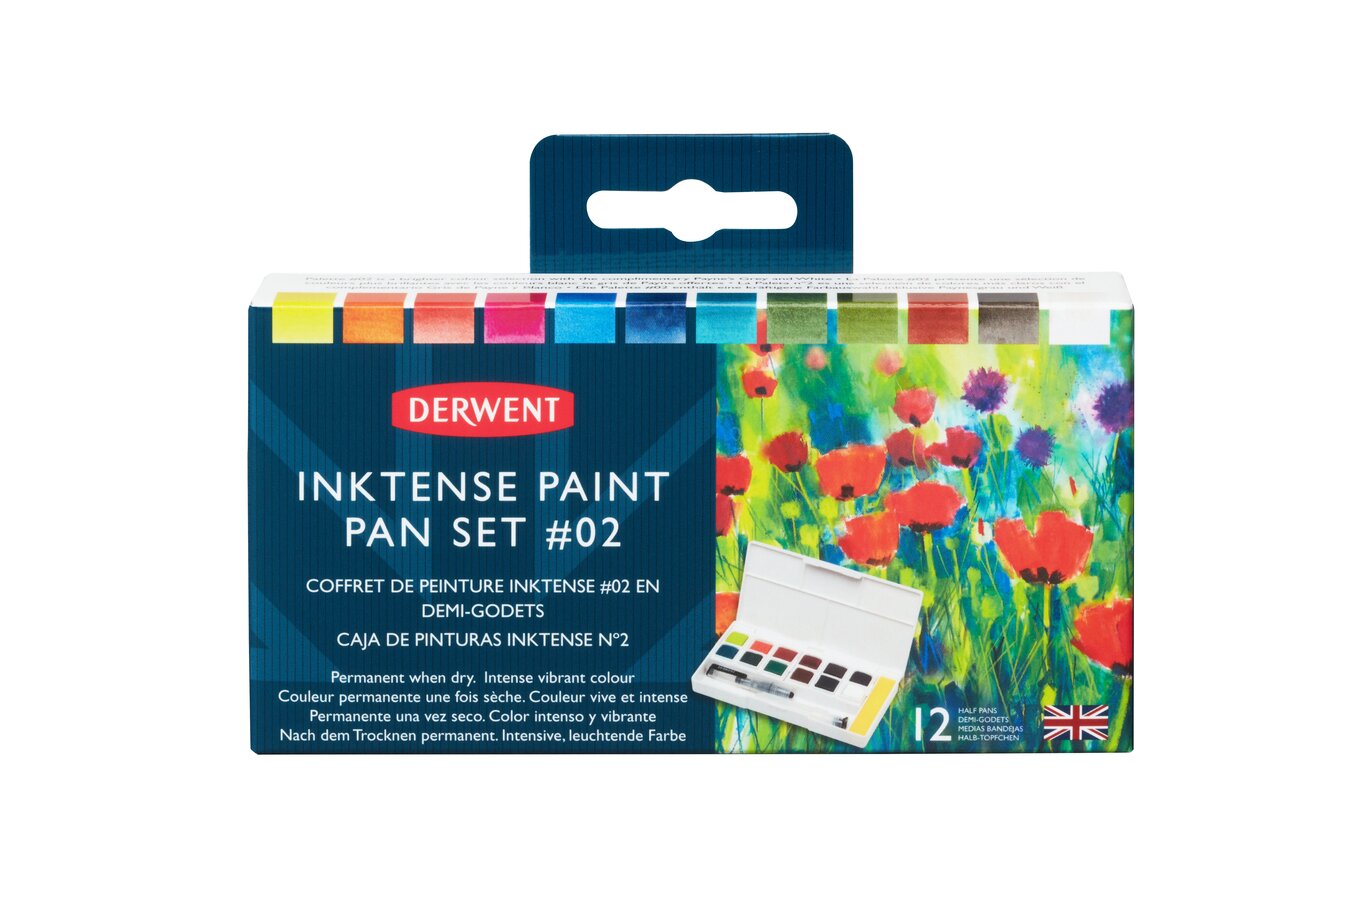 Derwent Inktense Paint Pans and Sets